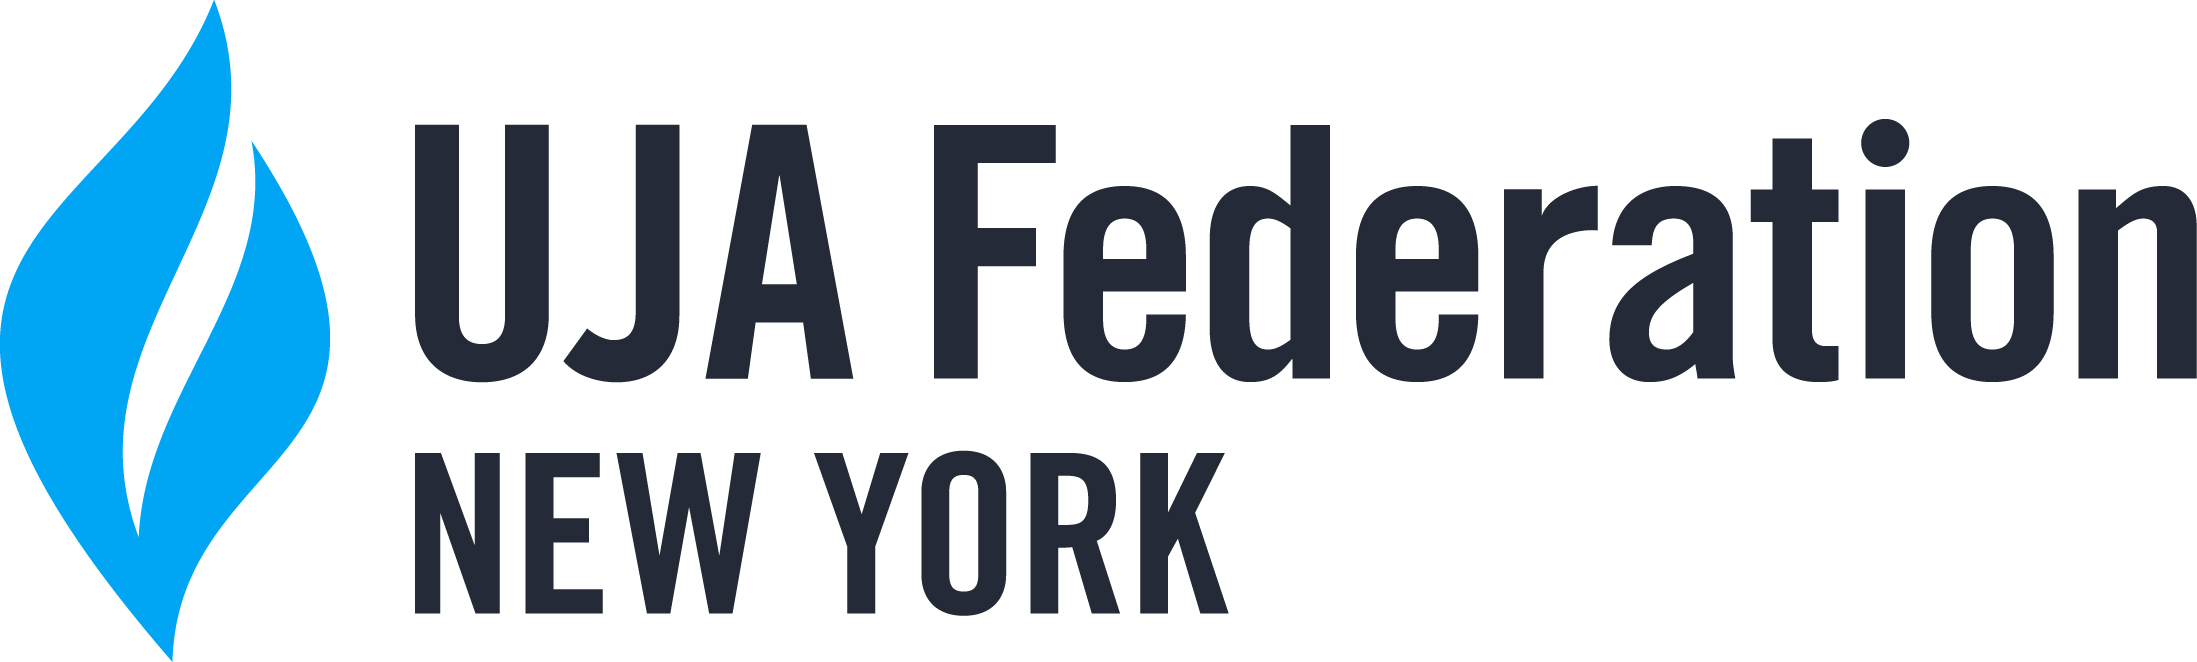 UJA Federation Logo of New York | Jewish Women's Archive